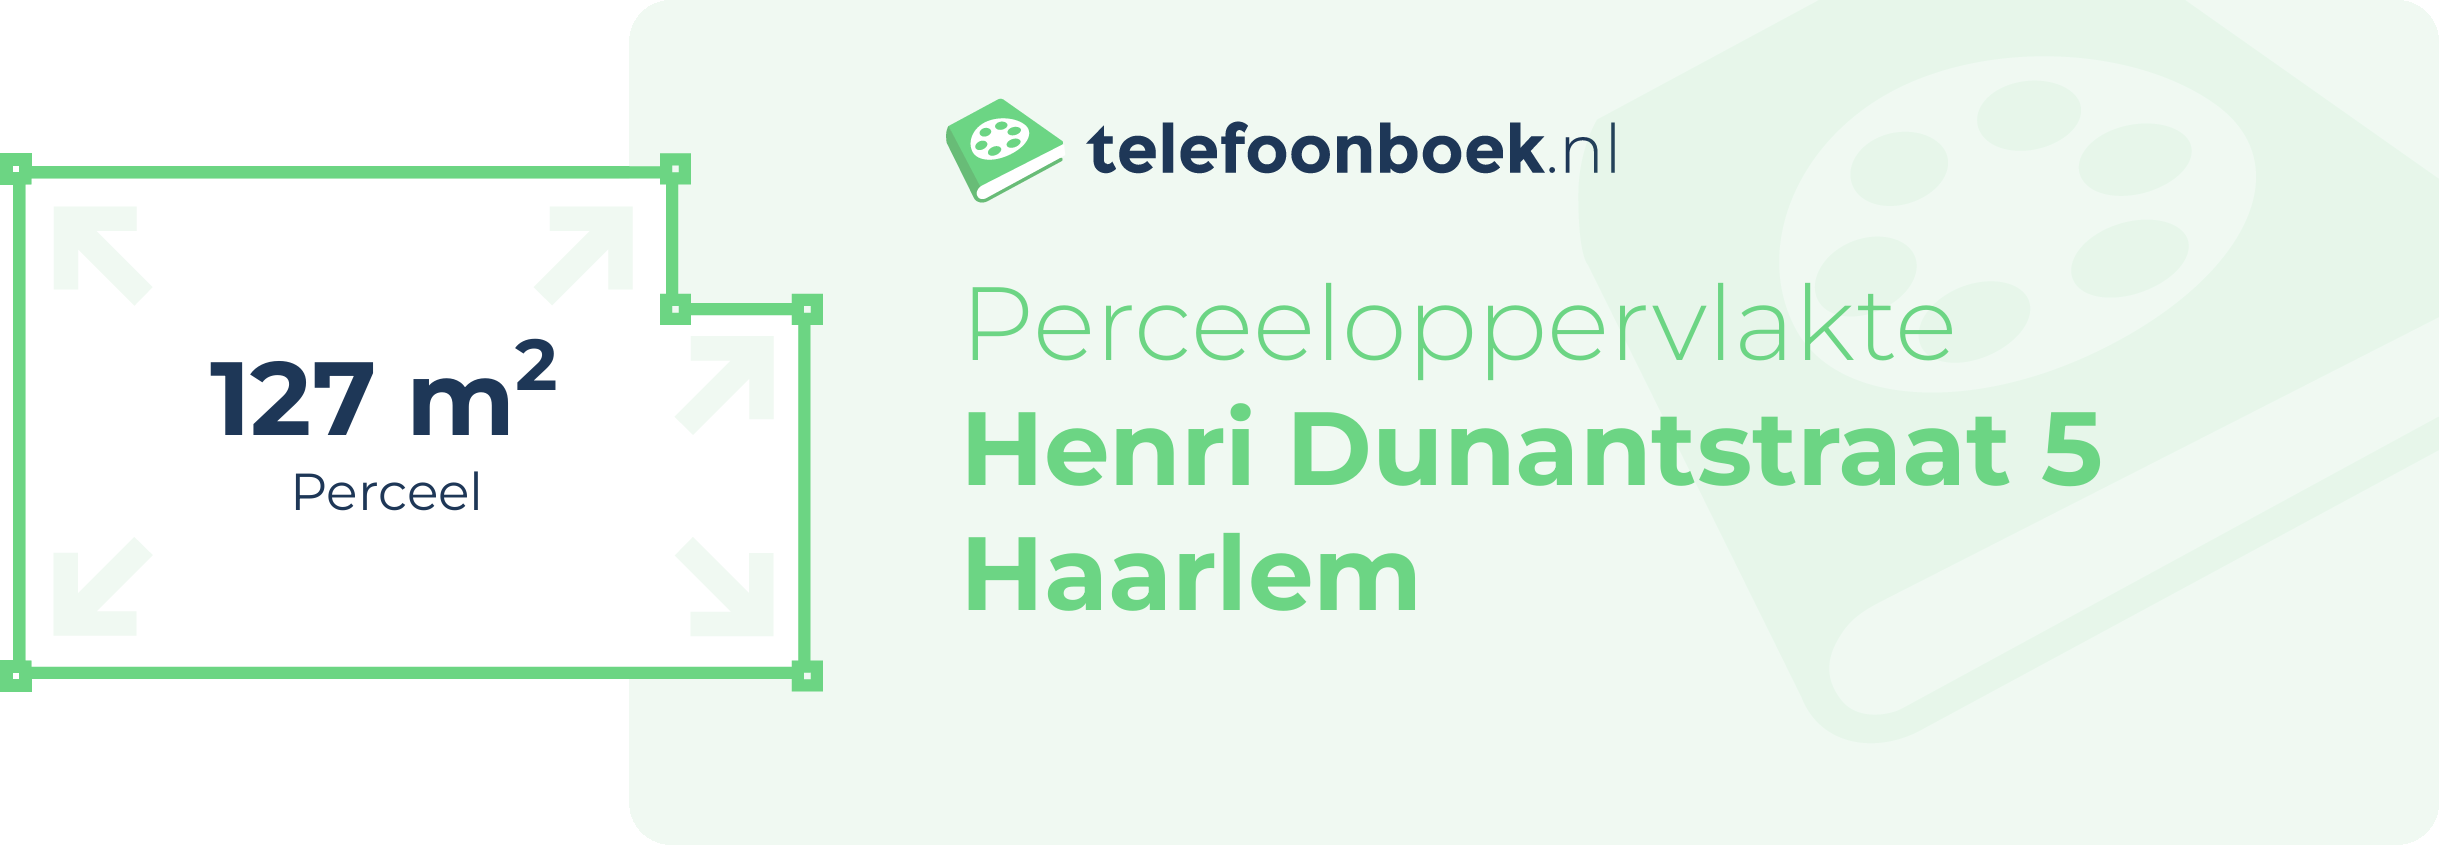 Perceeloppervlakte Henri Dunantstraat 5 Haarlem